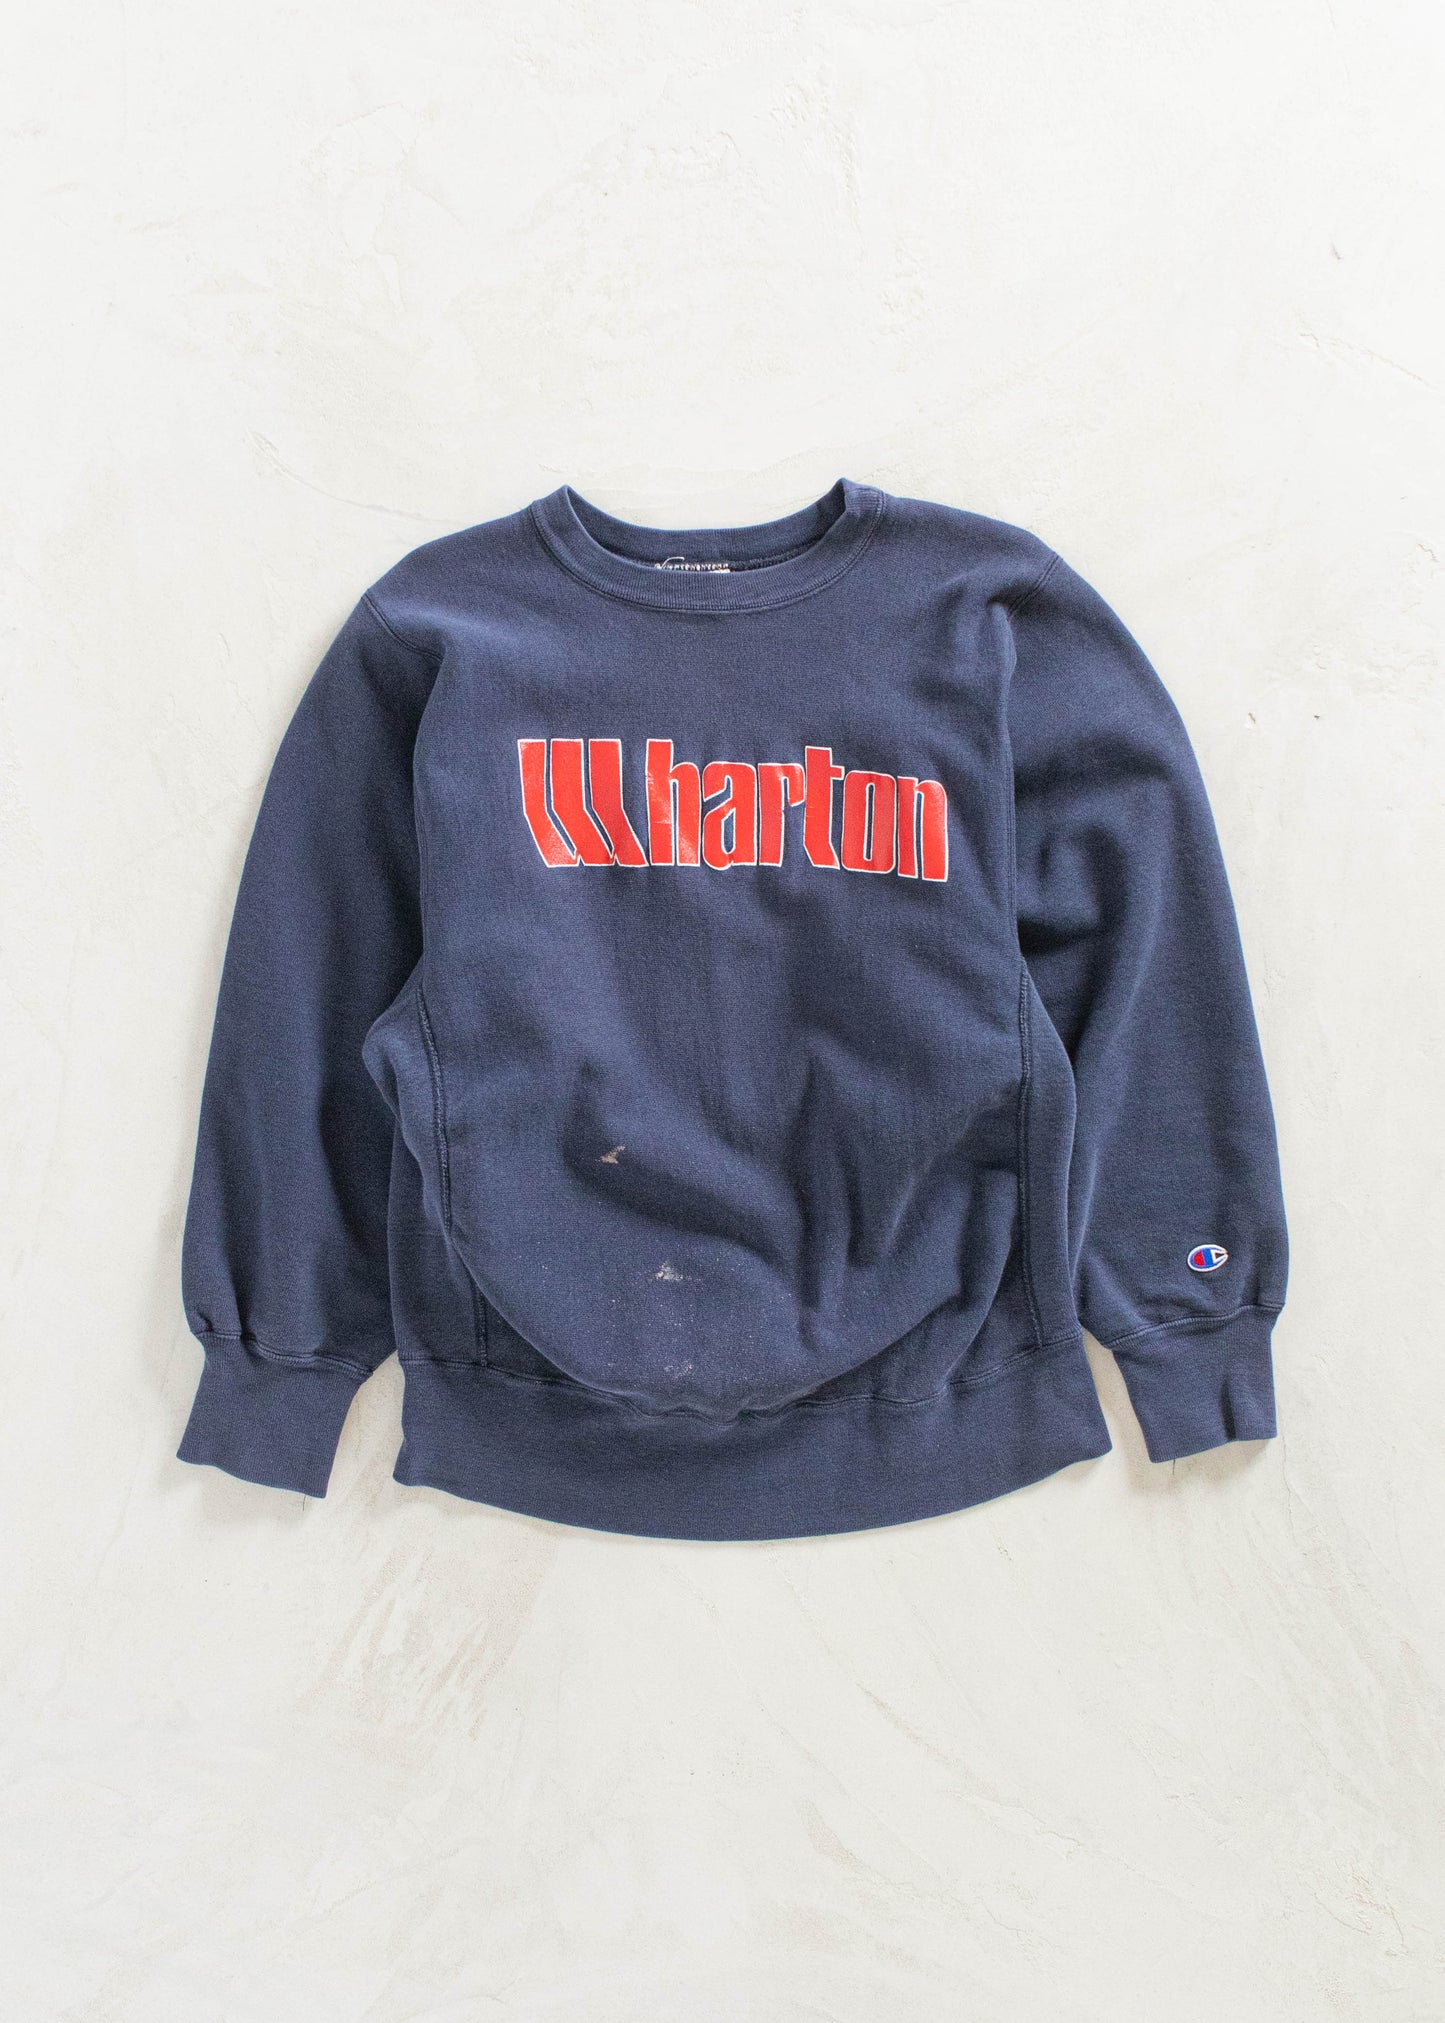 Vintage 1980s Champion Reverse Weave Warmup Harton Sweatshirt Size S/M